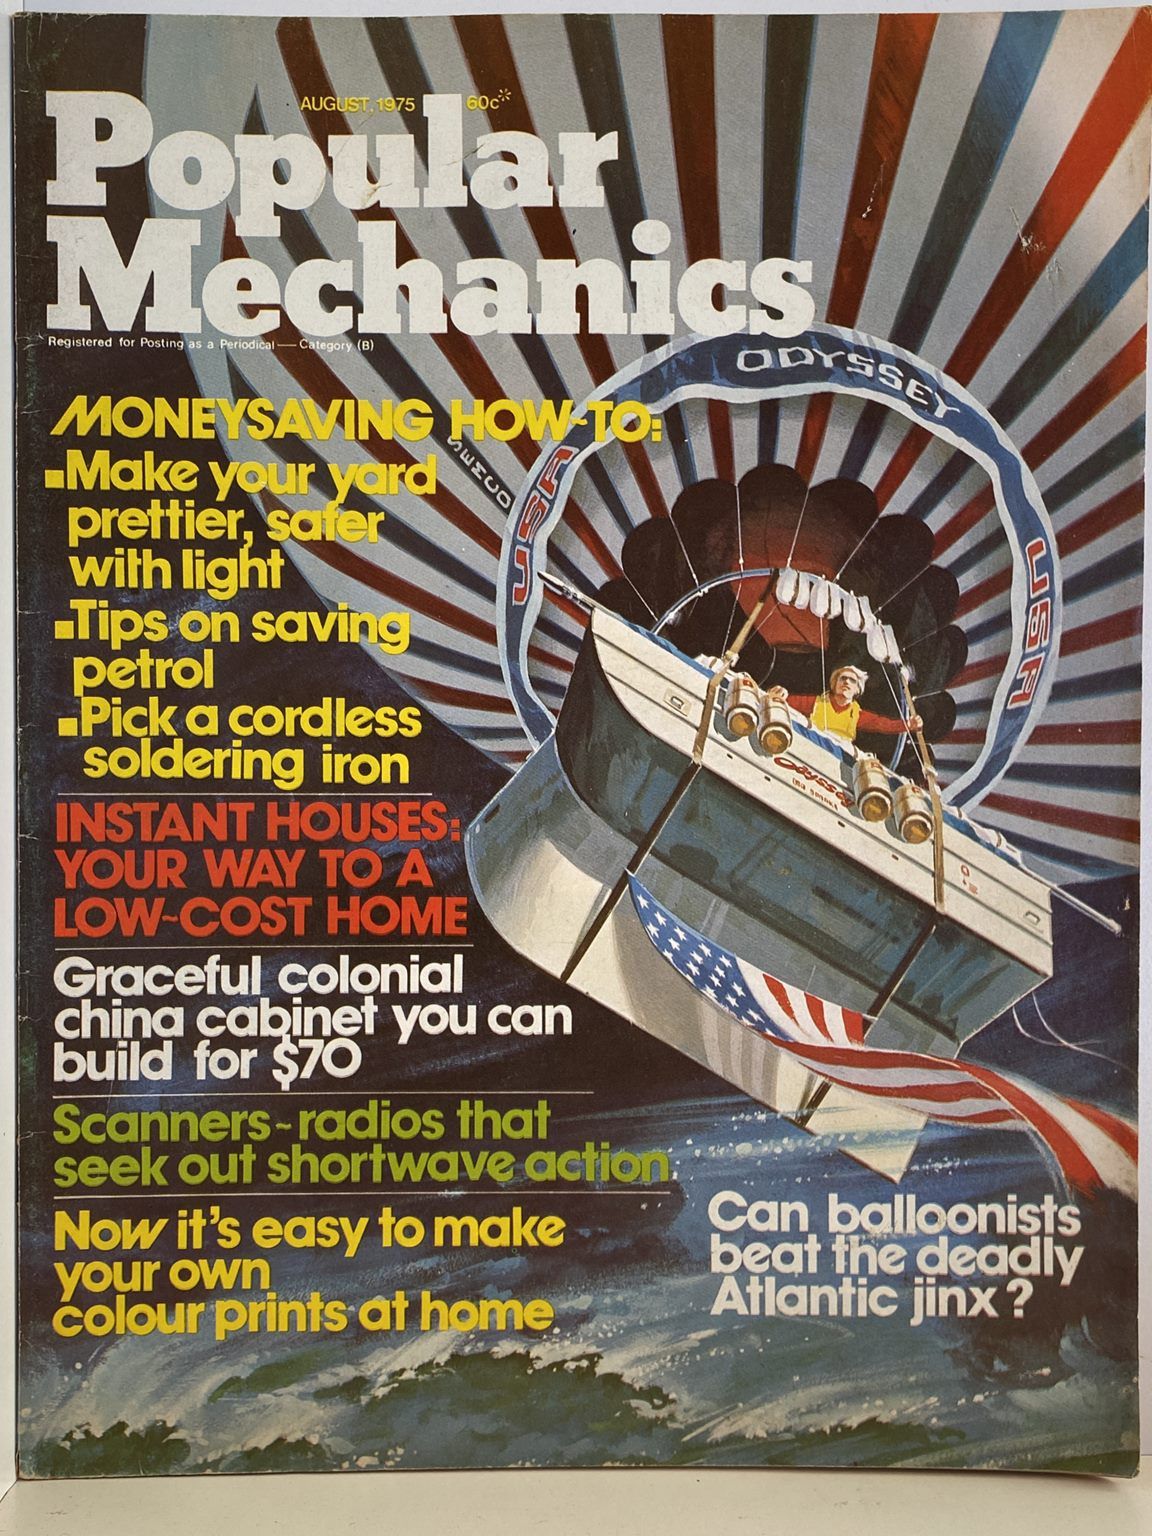 VINTAGE MAGAZINE: Popular Mechanics - Vol. 143, No. 6 - August 1975